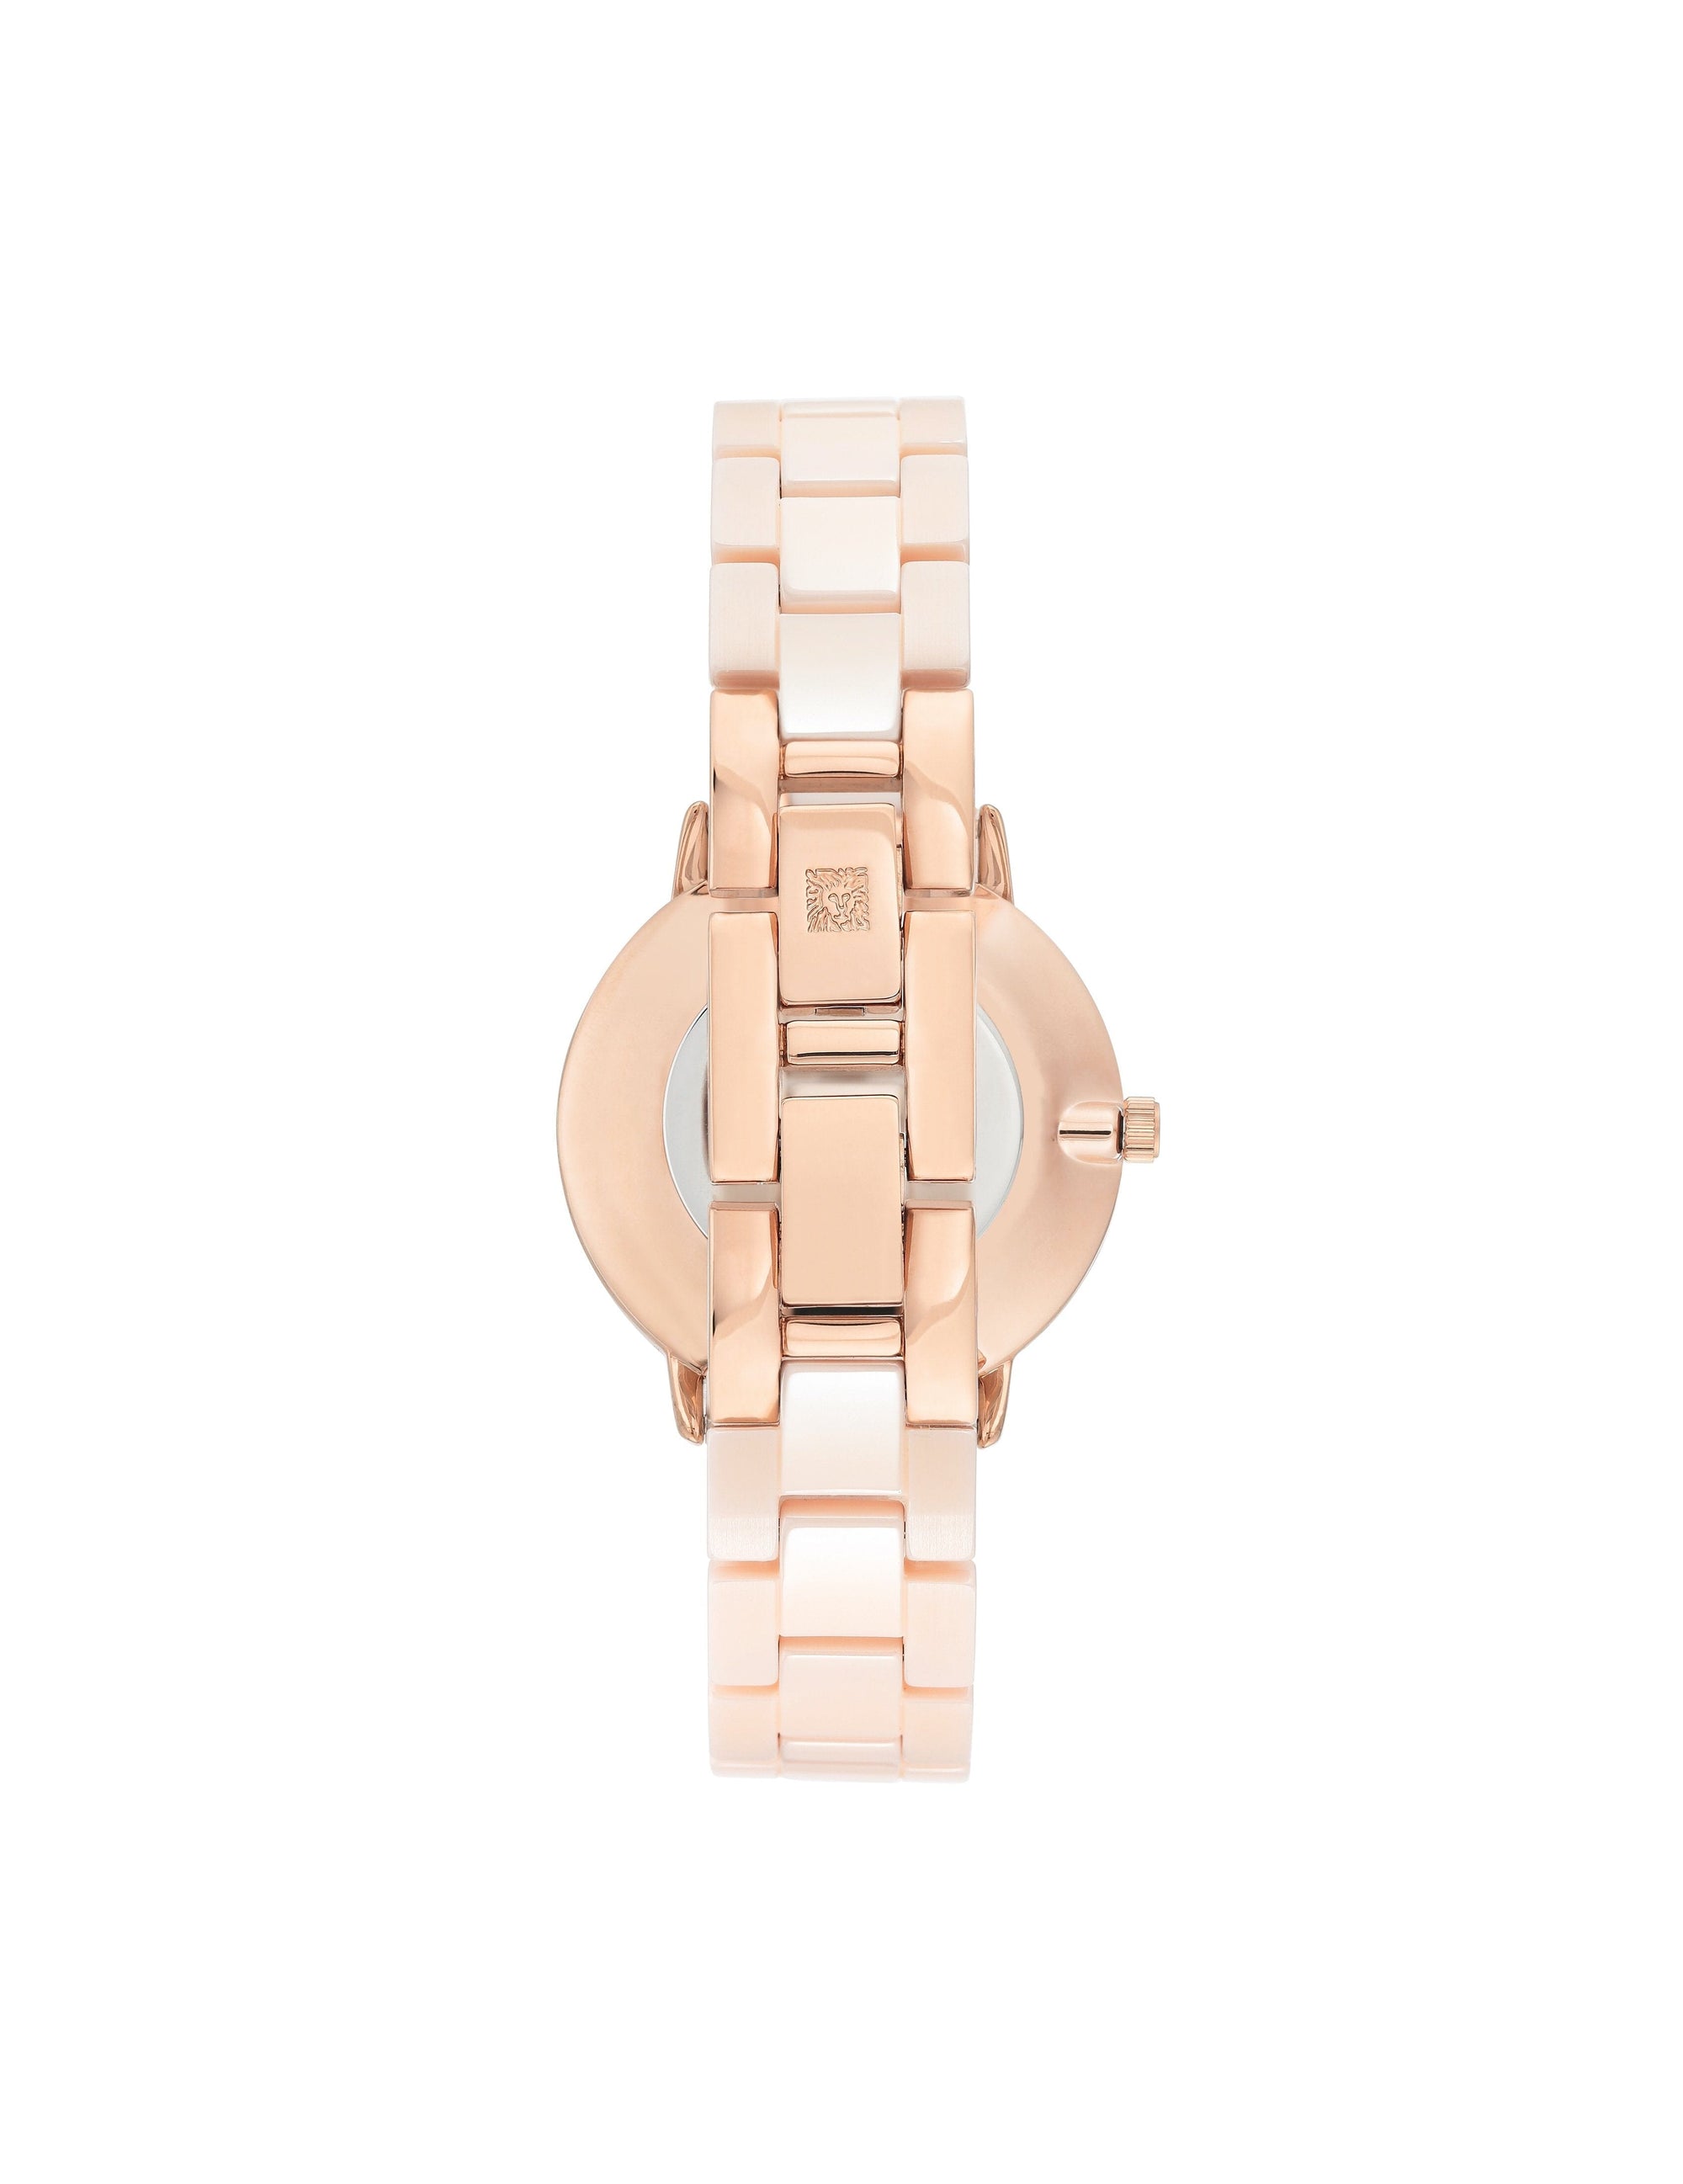 light pink rose gold ceramic bracelet watch